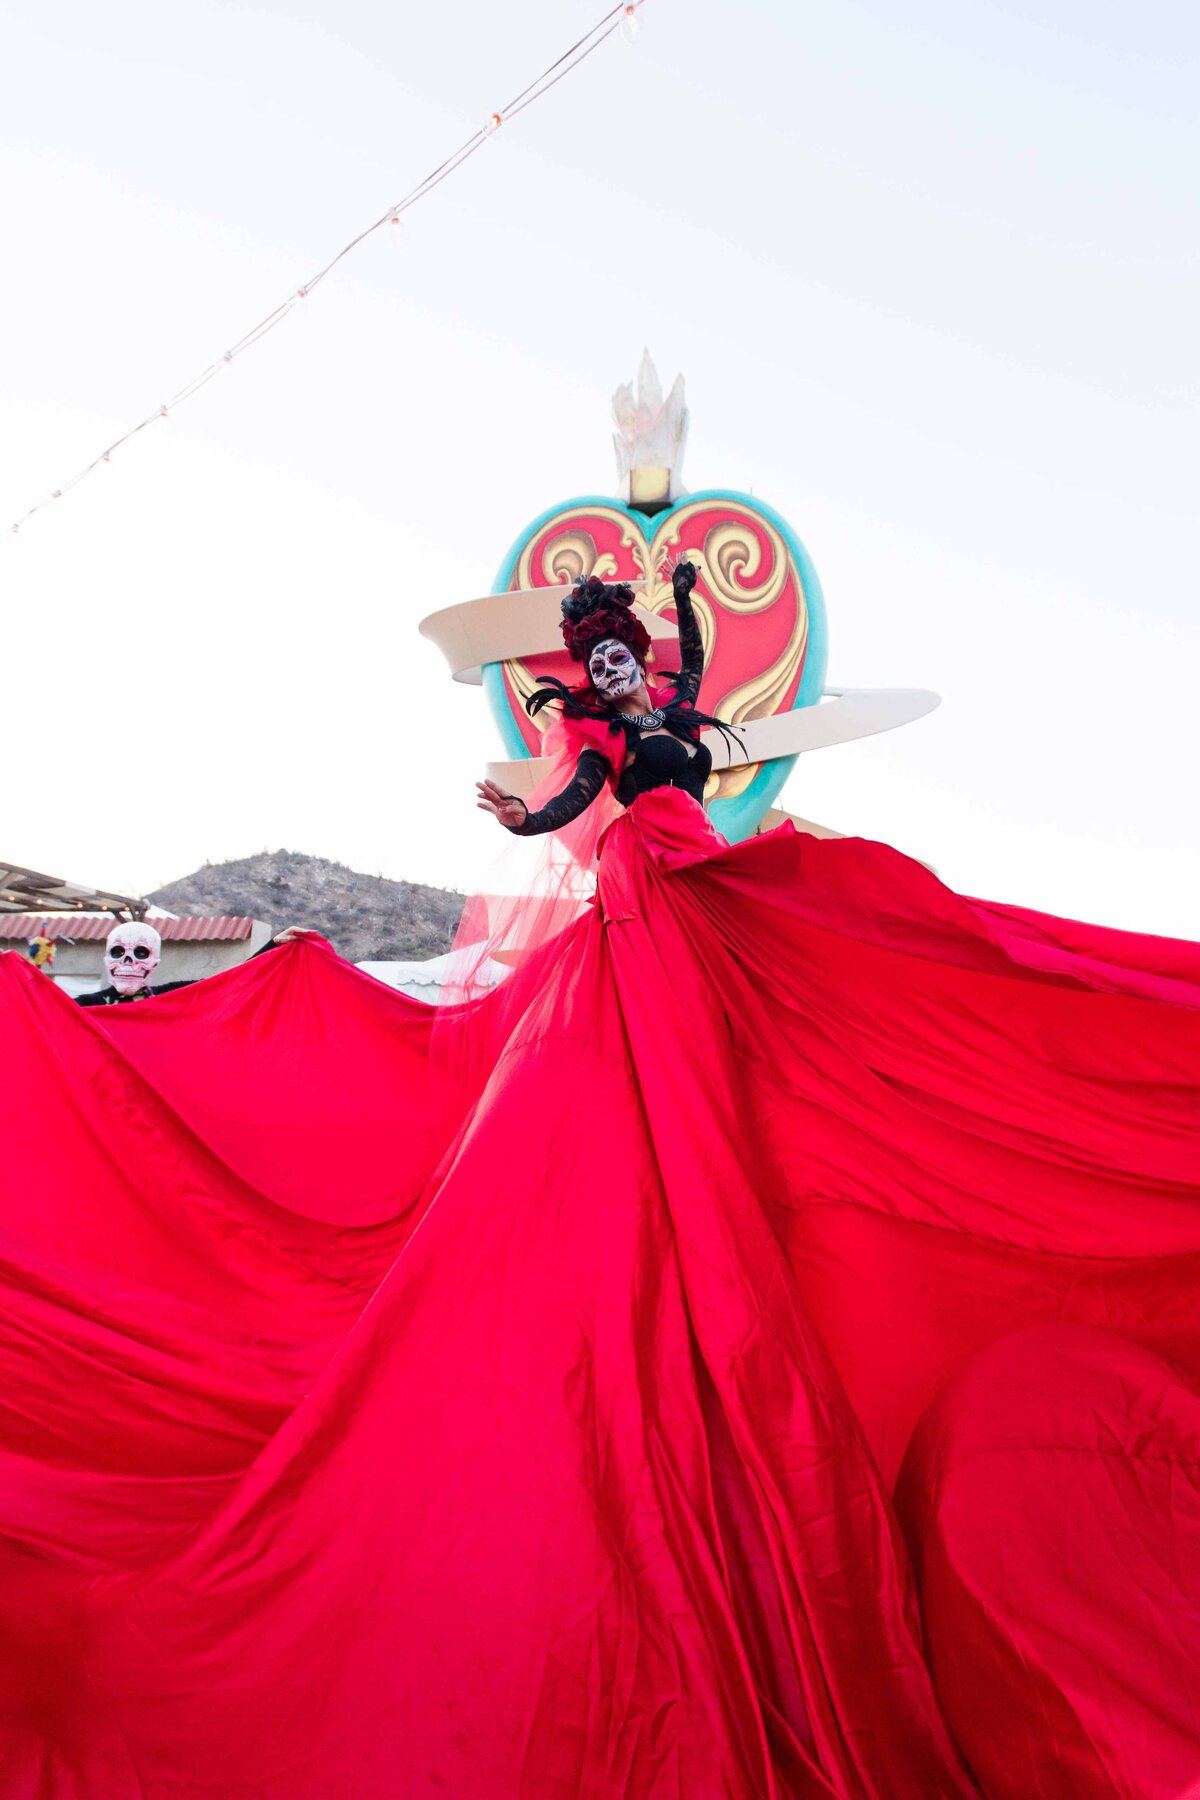 A women on stilts dances wearing long red dress for an immersive offsite celebration.